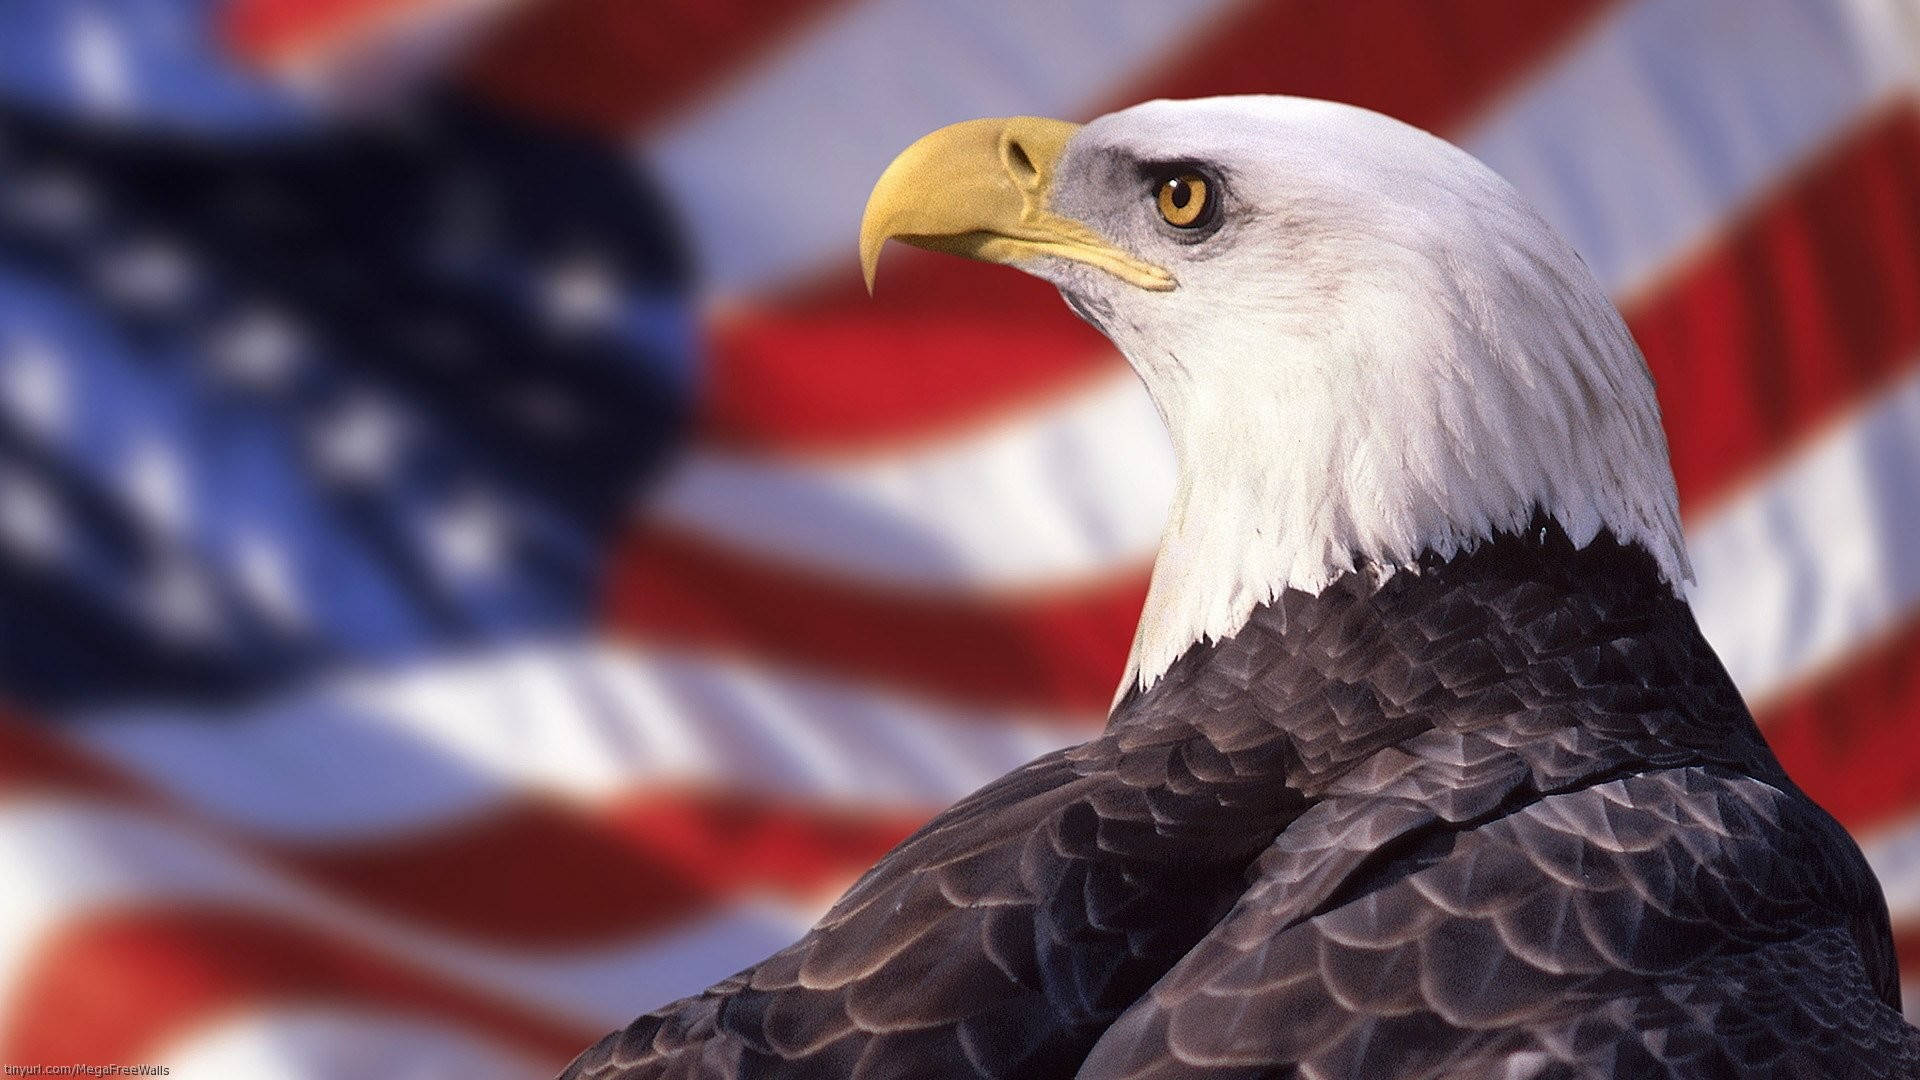 Aguila Bird On USA Flag Wallpaper